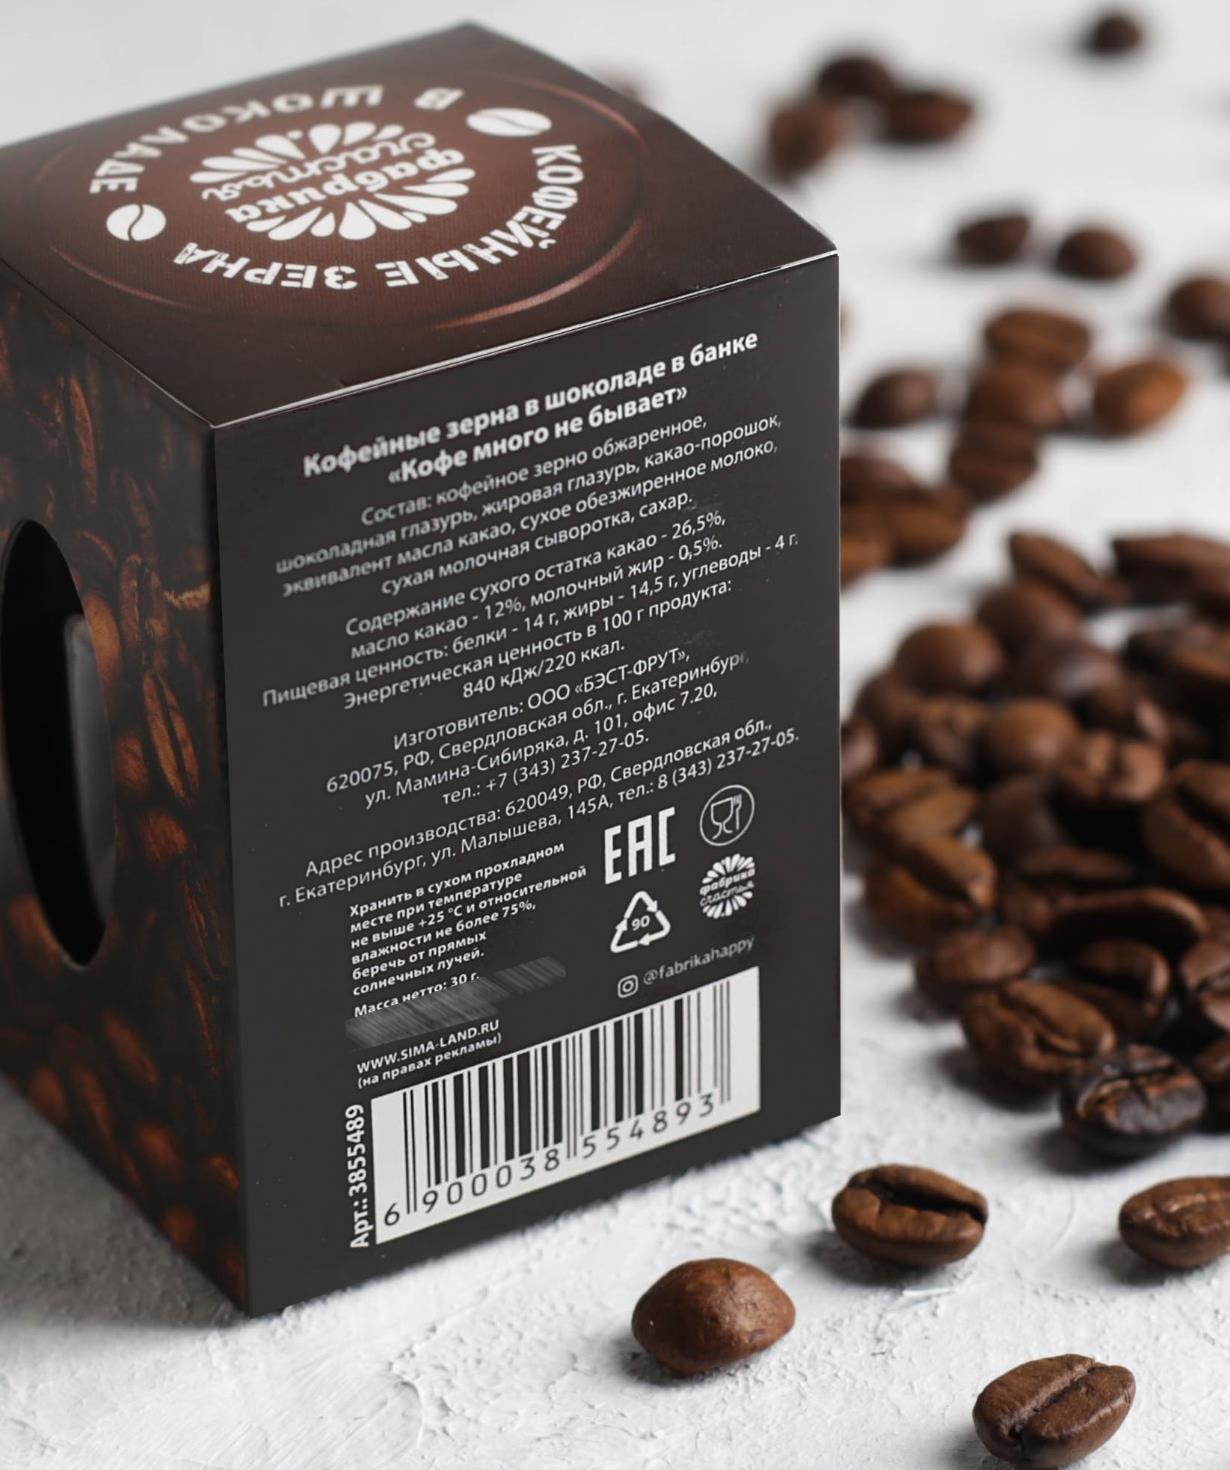 Coffee beans `Jpit.am` chocolate covered, Кофе много не бывает